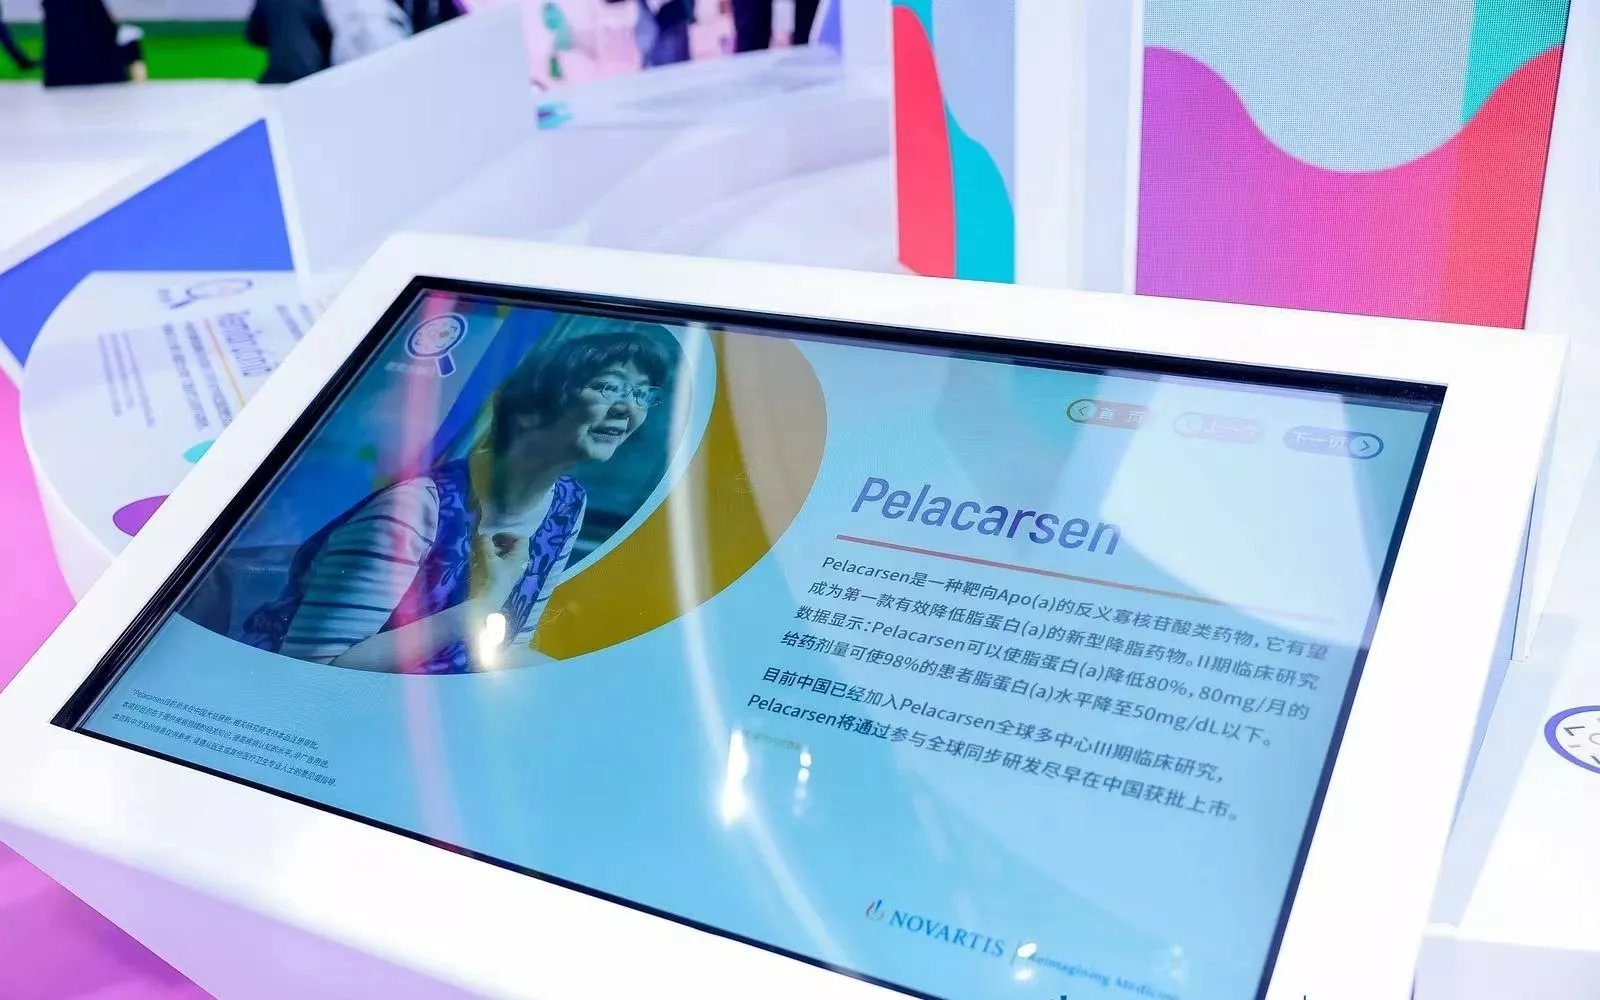 Pelacarsen 在第六届中国国际进口博览会上展出